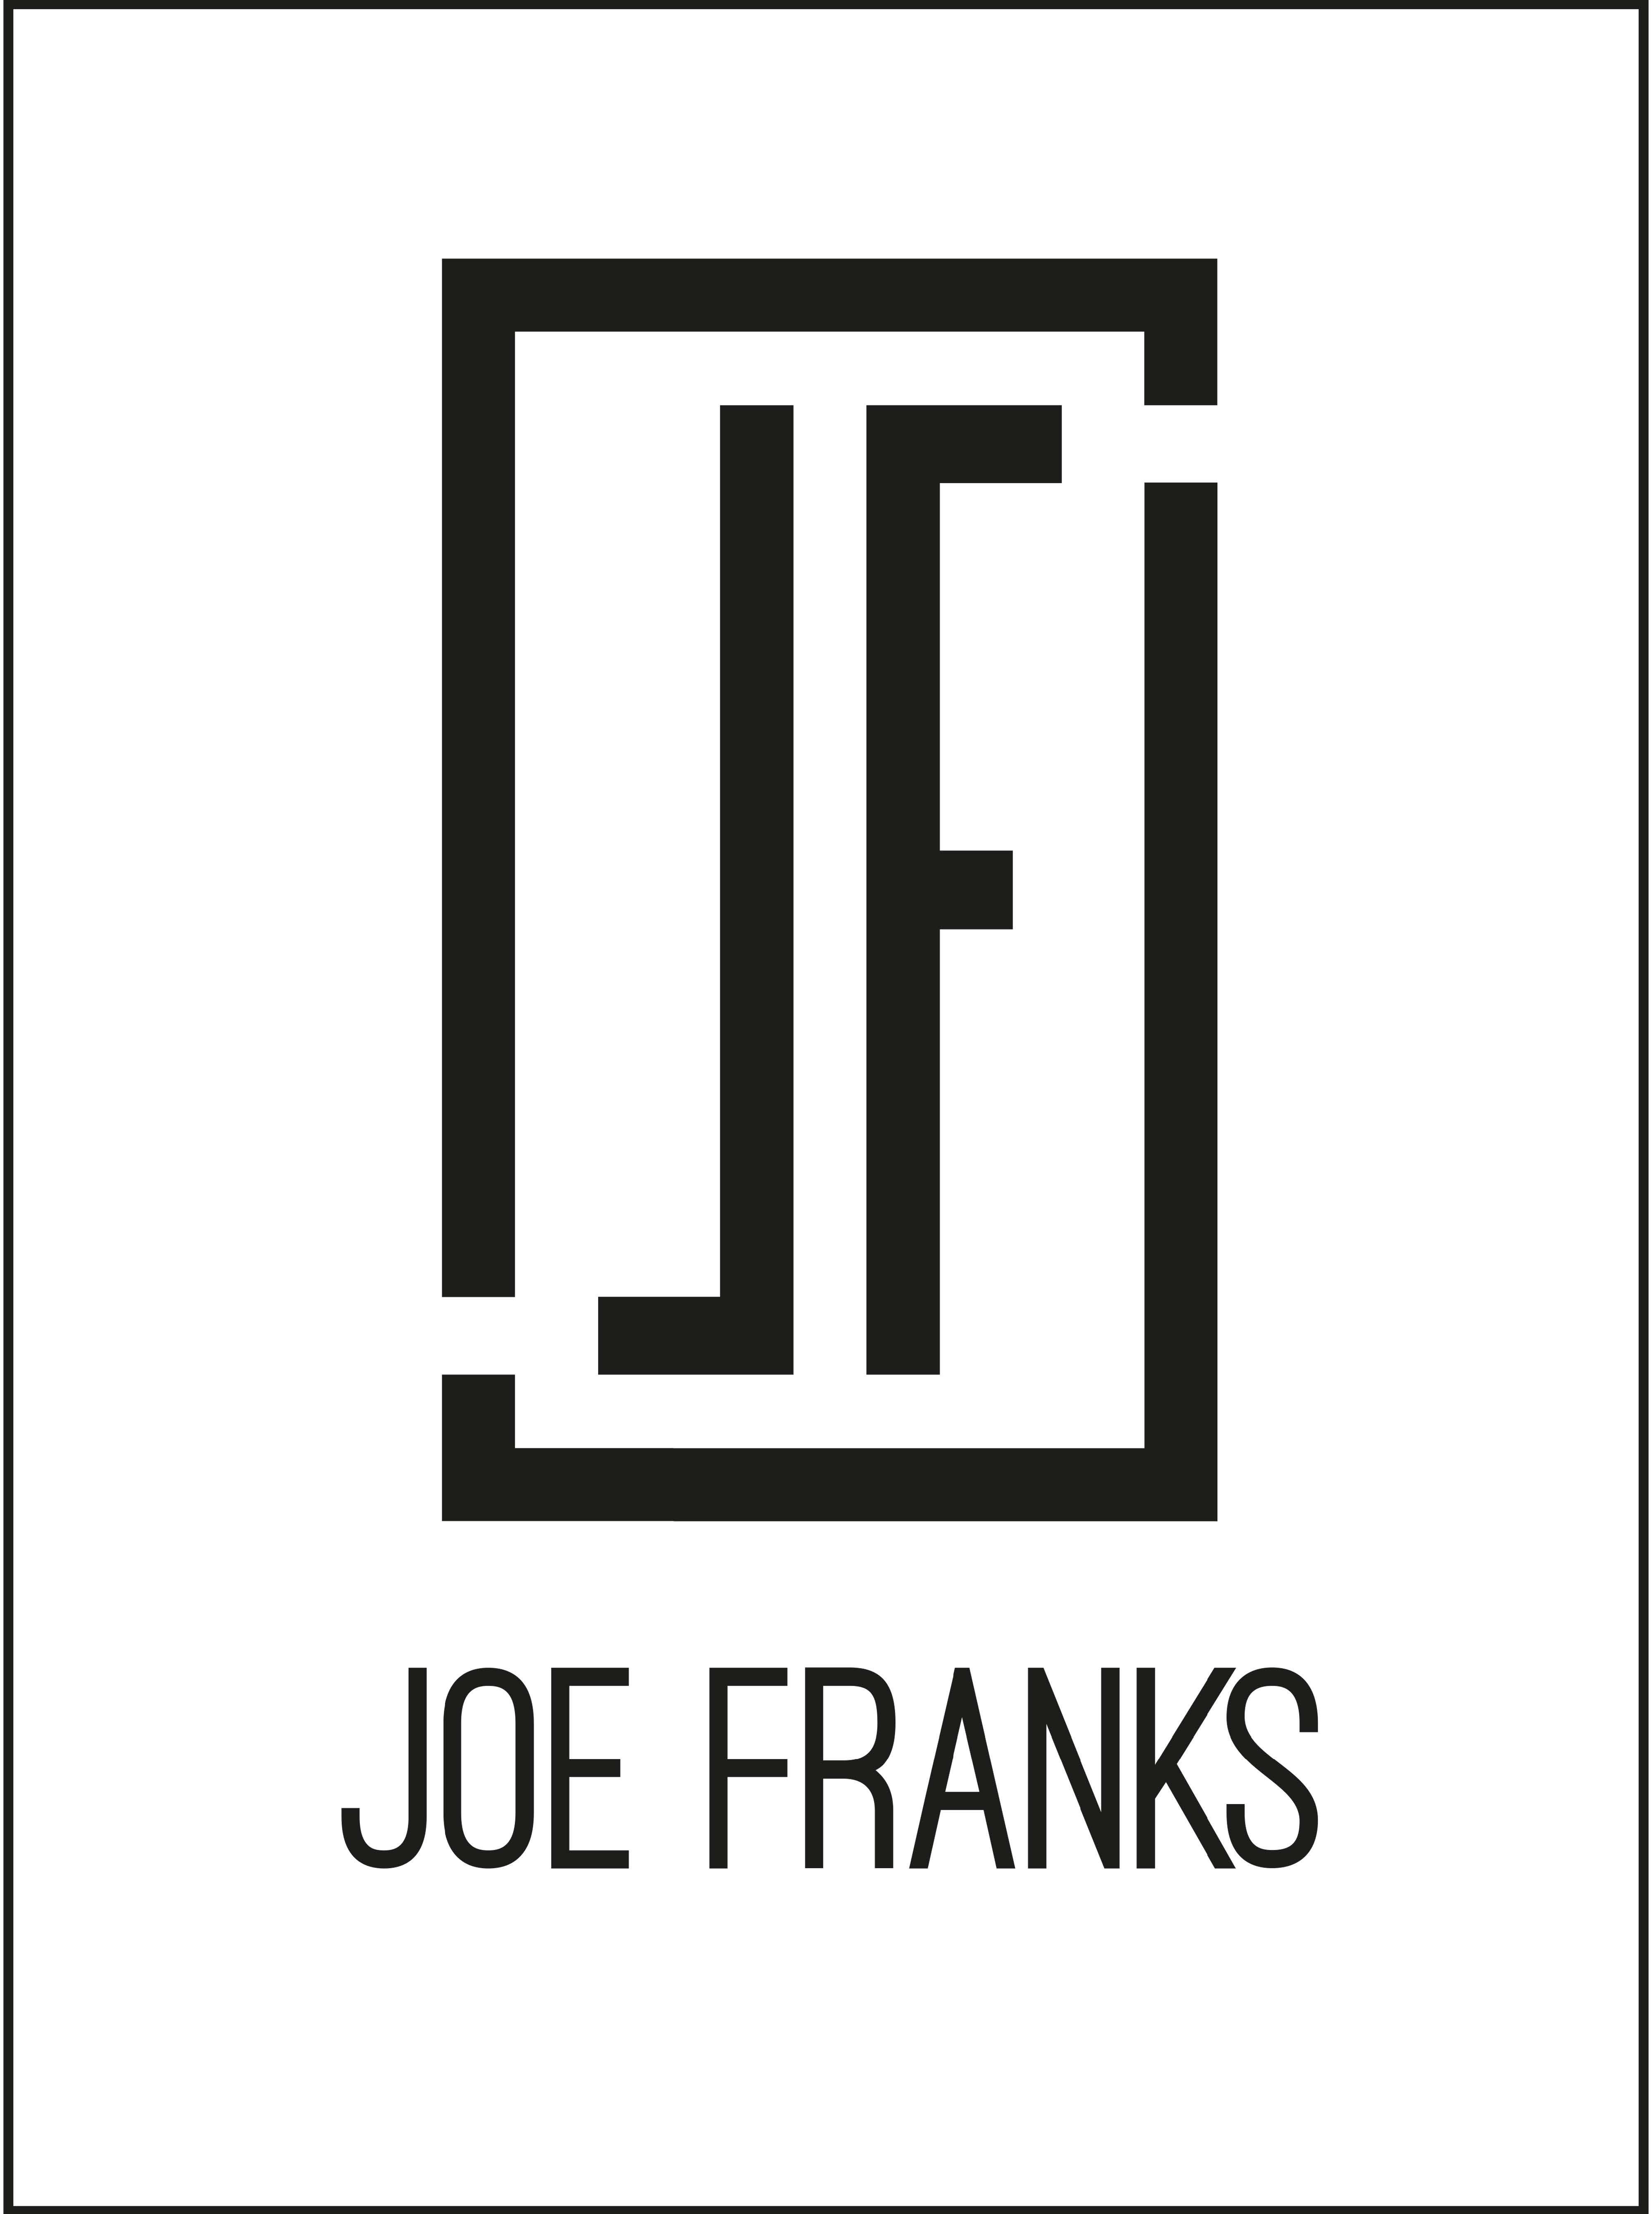 Joe Franks